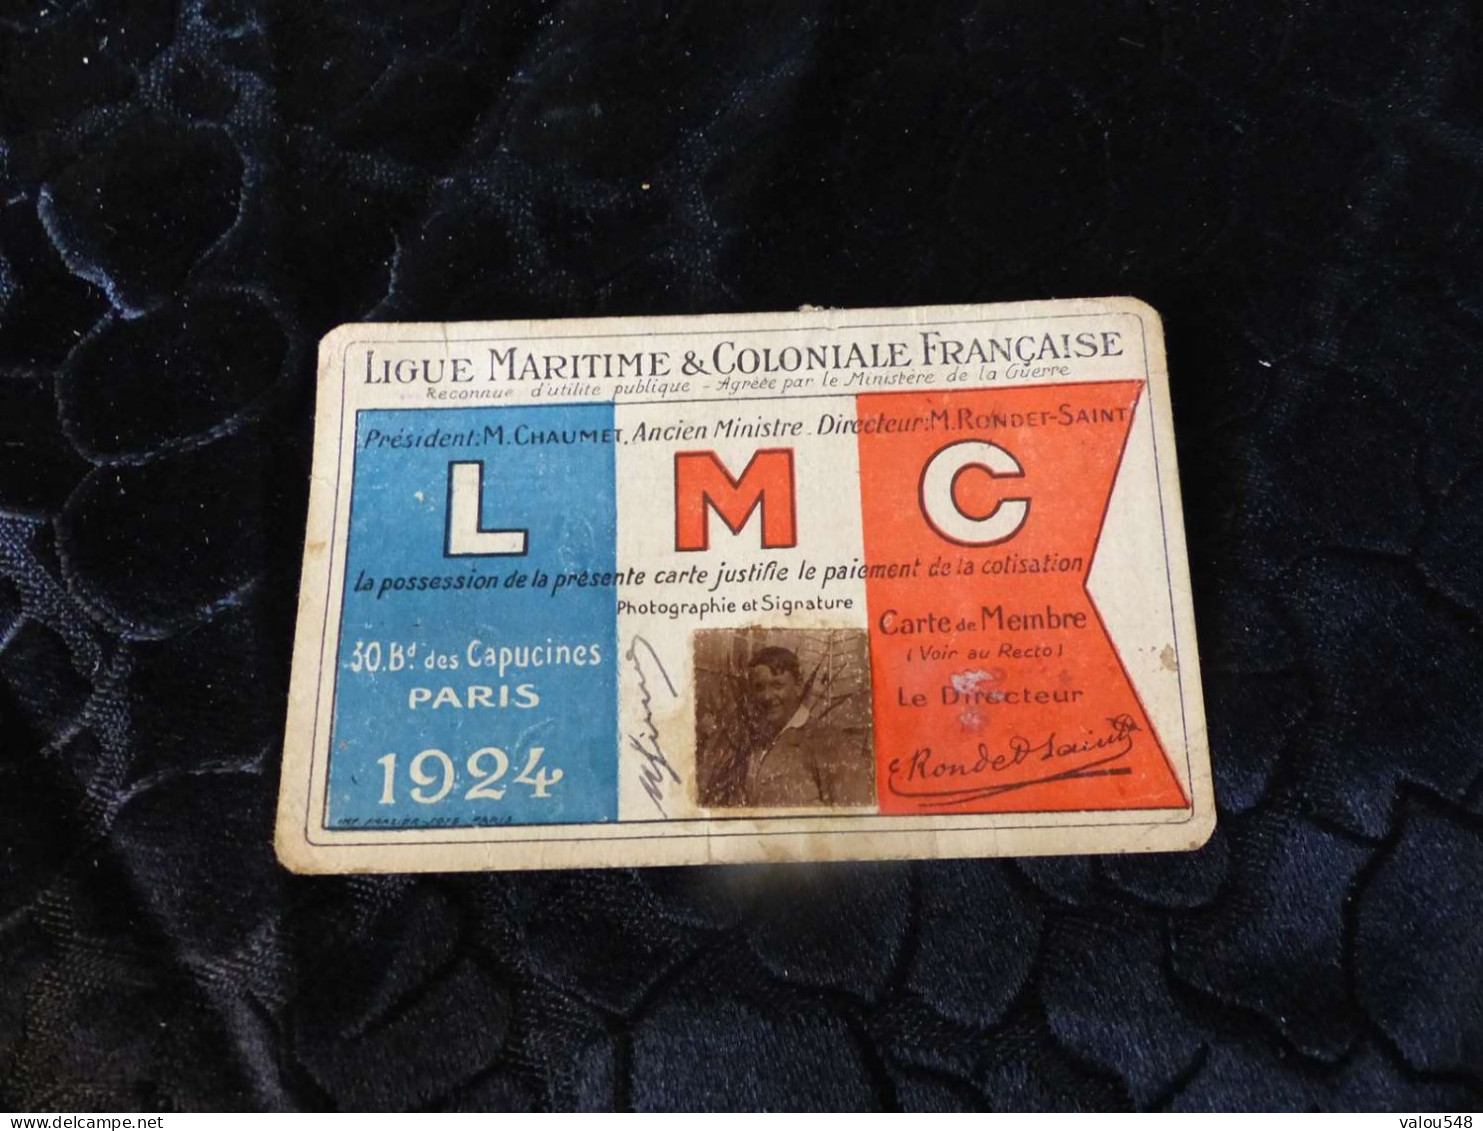 VP-47 , Carte De Membre, LMC, Ligue Maritime Et Coloniale Française, 1924 - Lidmaatschapskaarten